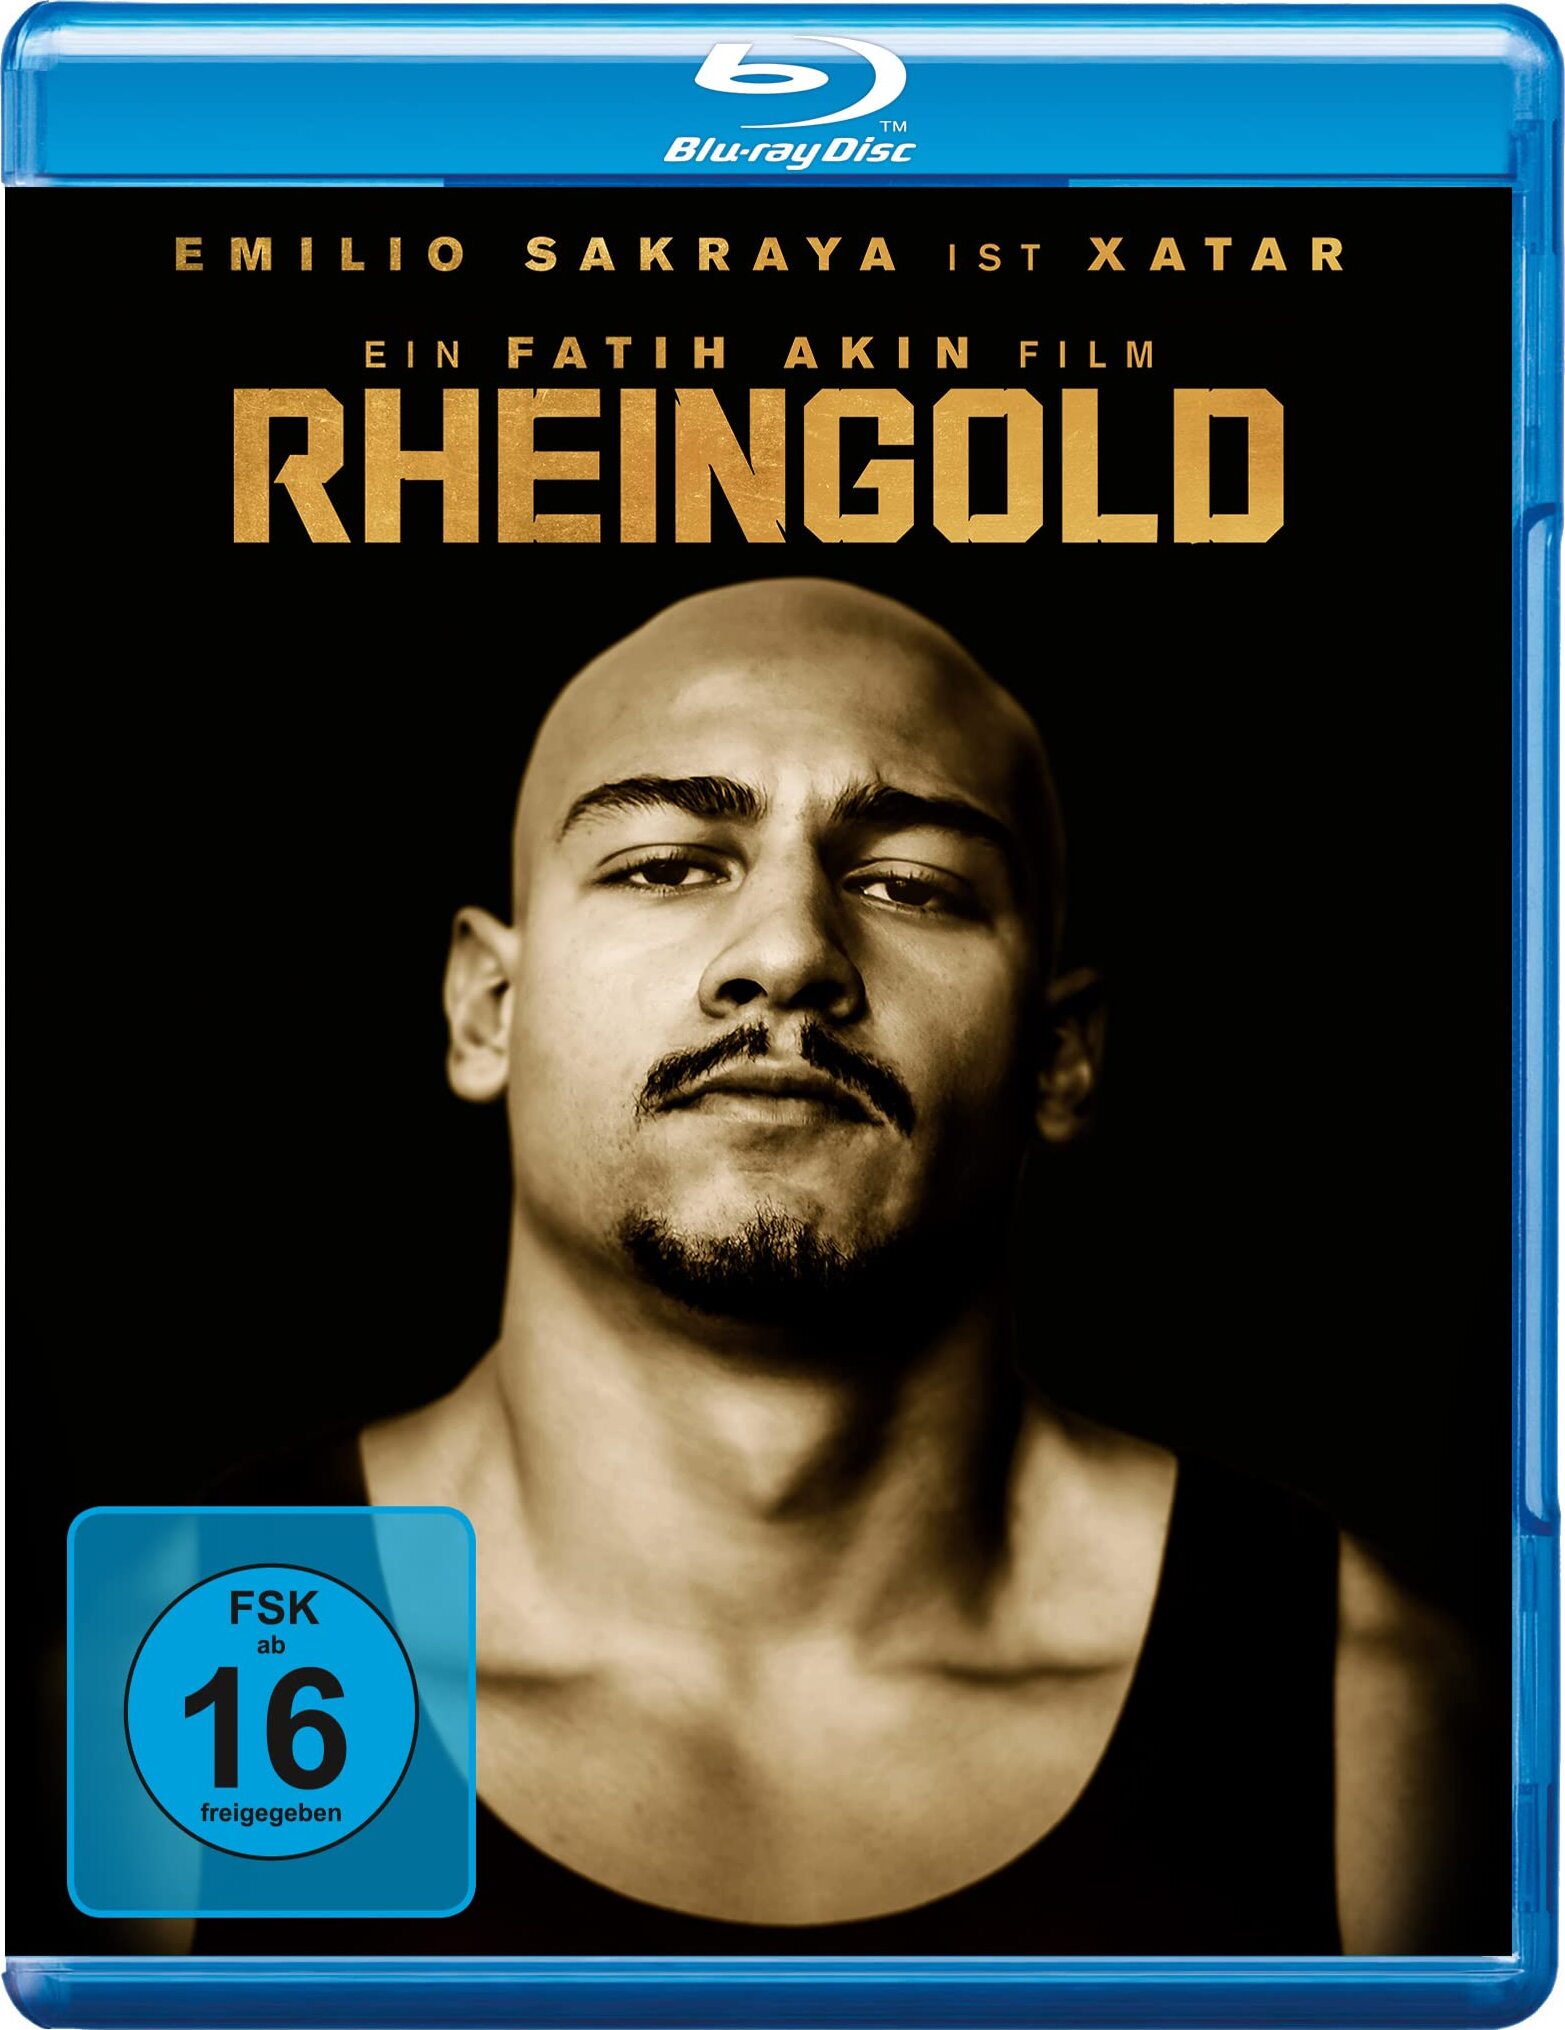 In Den Krallen des Roten Phönix-Cover B: DVD et Blu-ray 